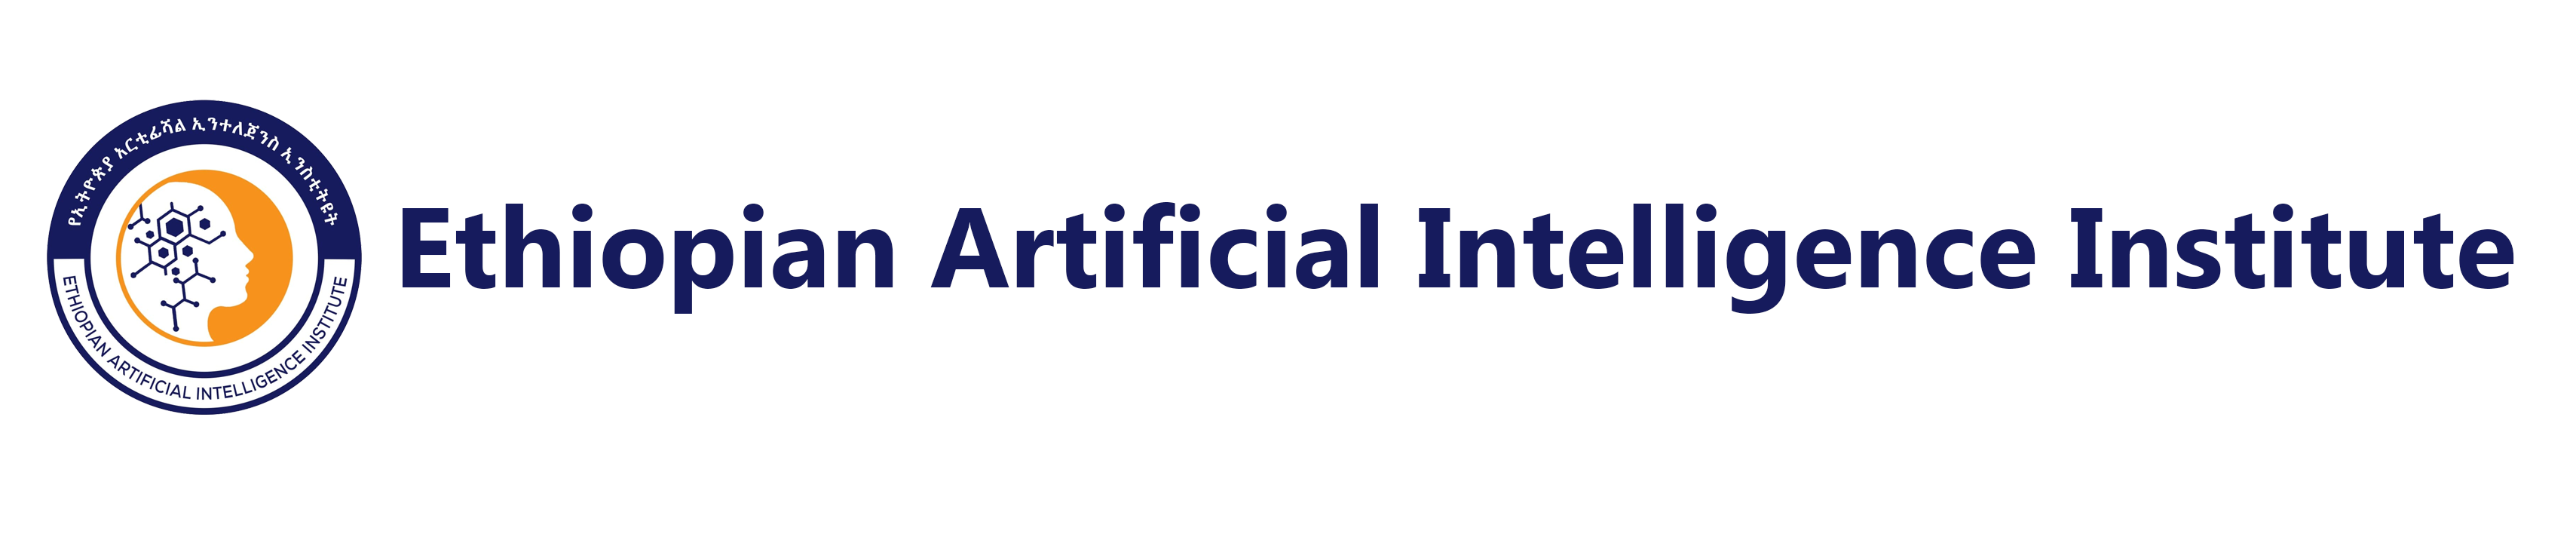 Artificial Intelligence Institute